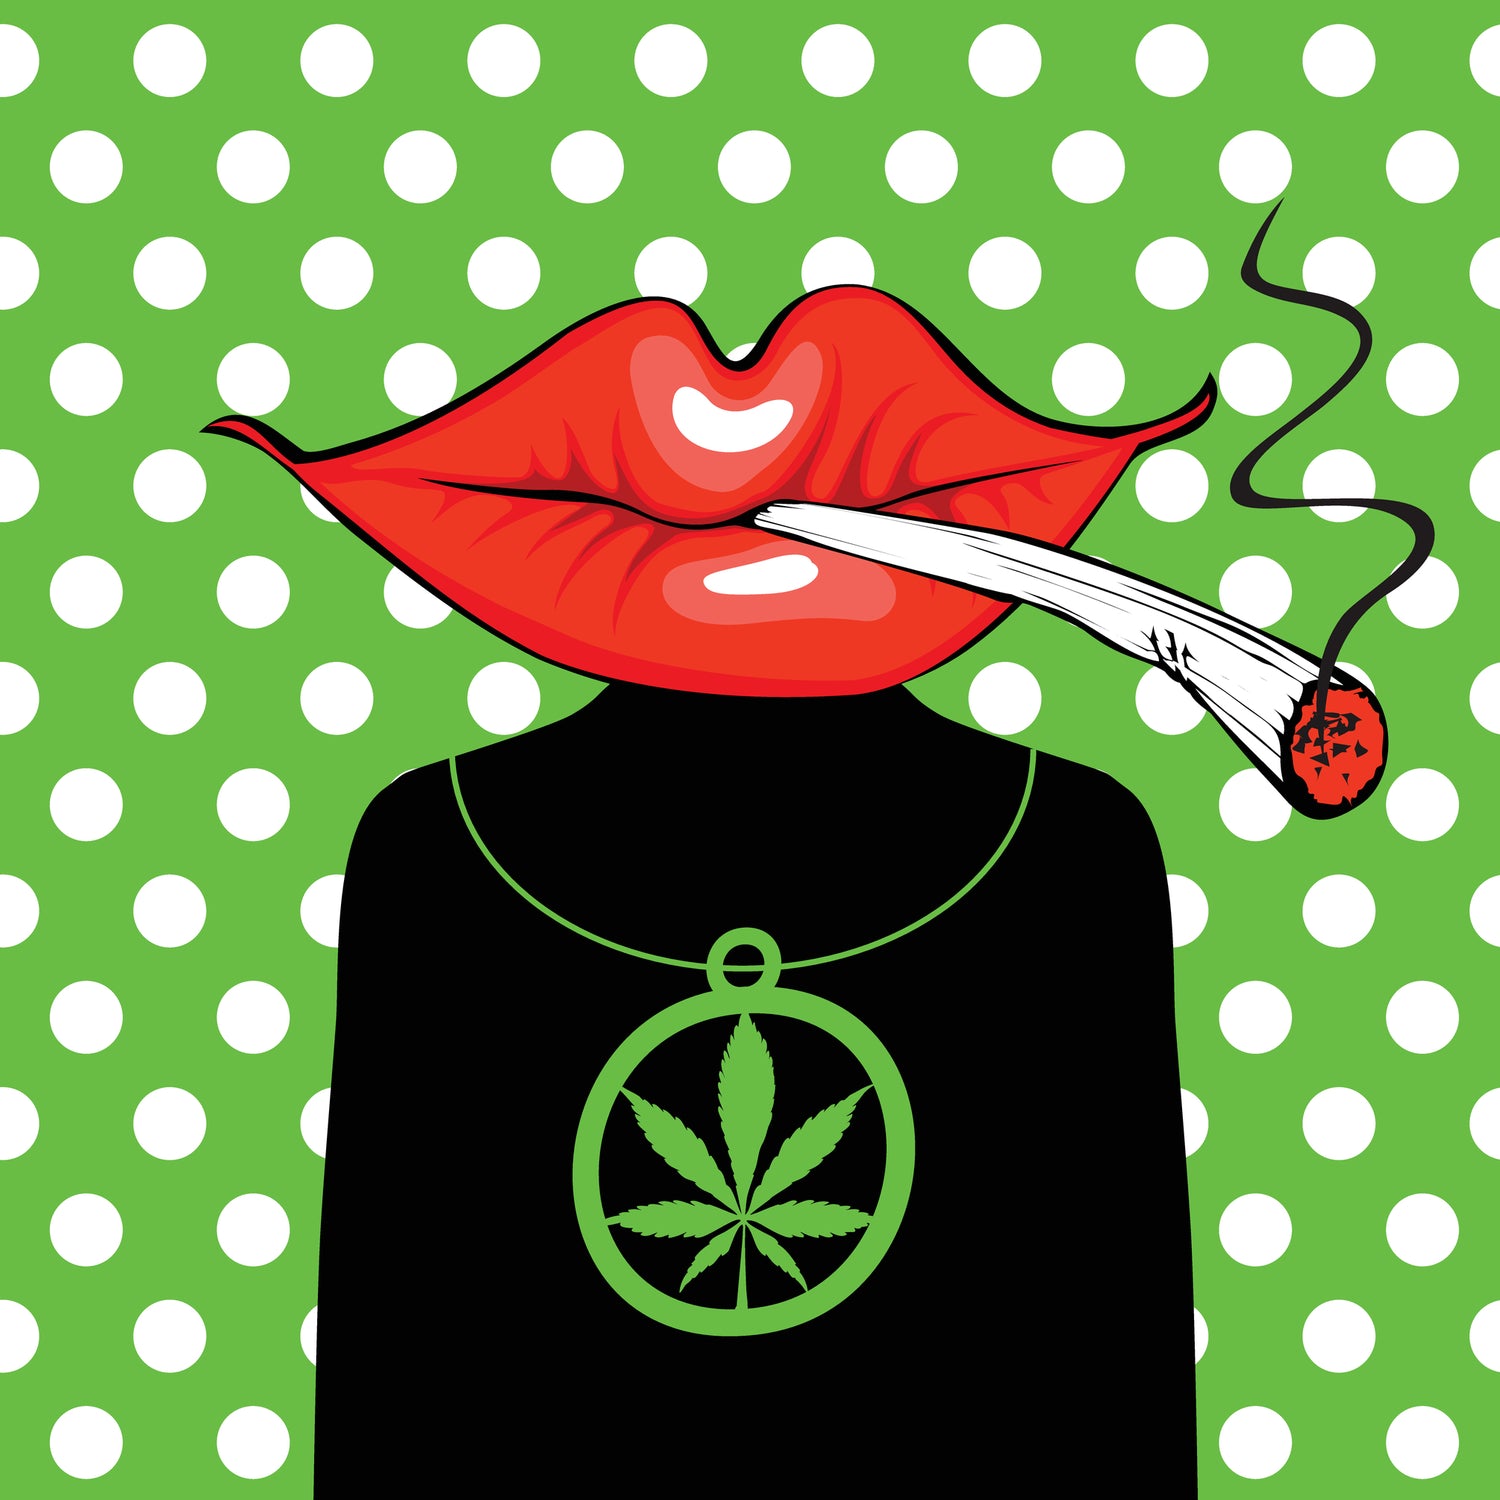 Cannabis-Themed Merchandise